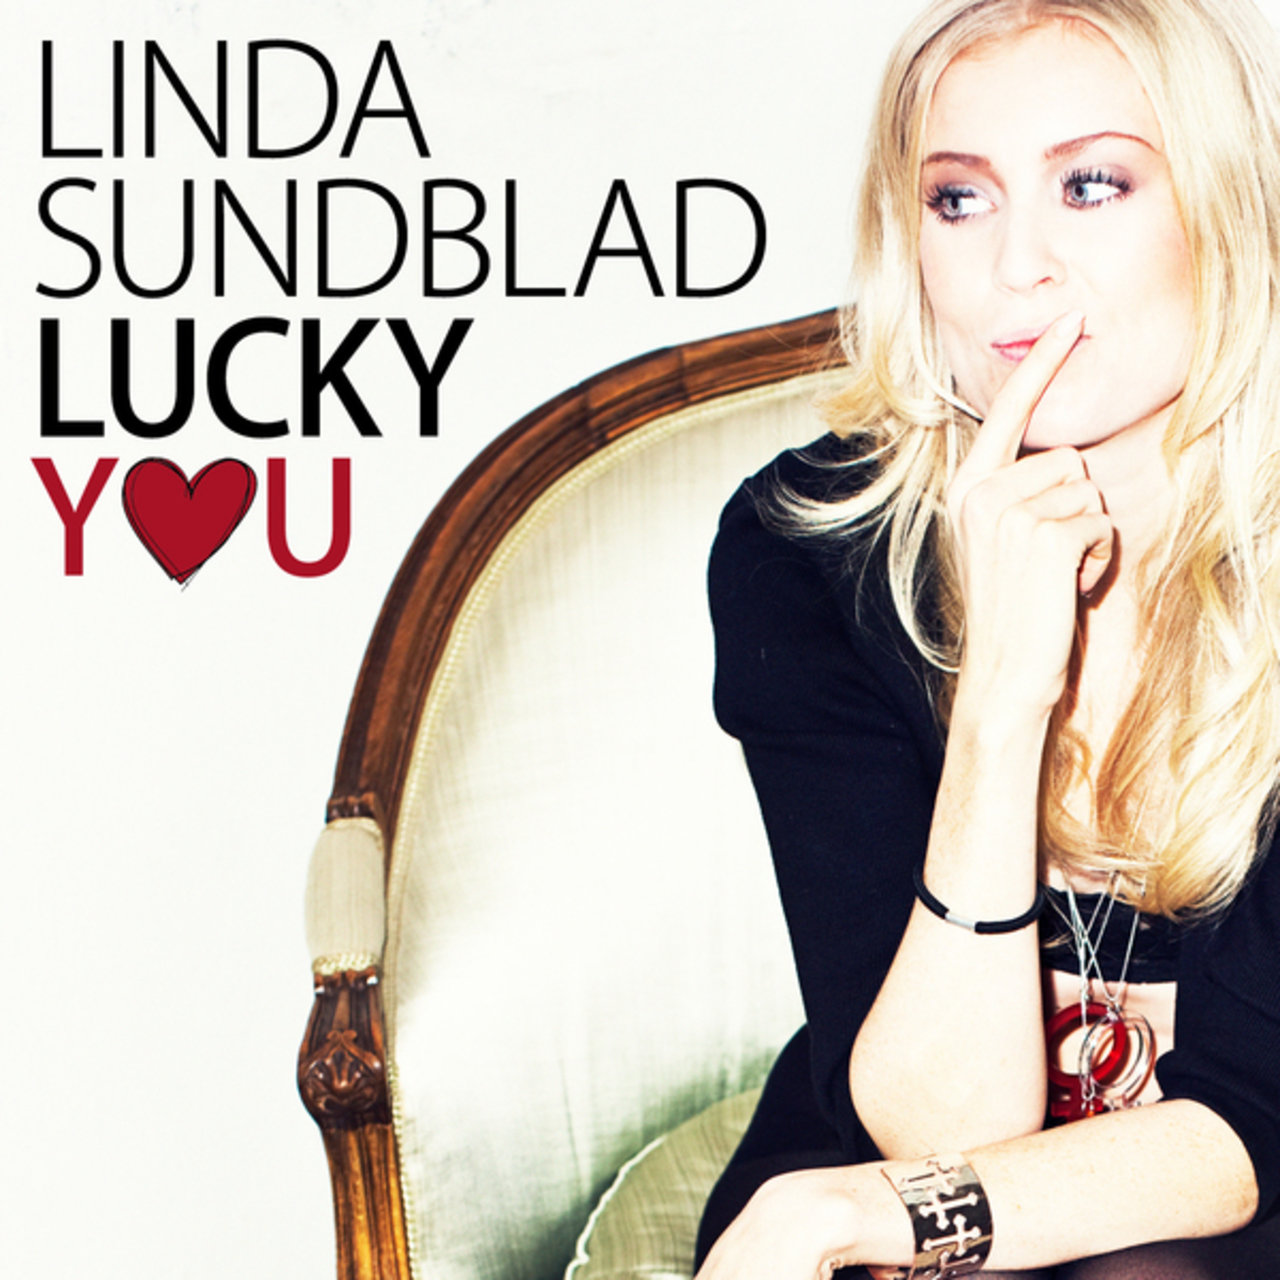 Linda Sundblad Lucky You cover artwork